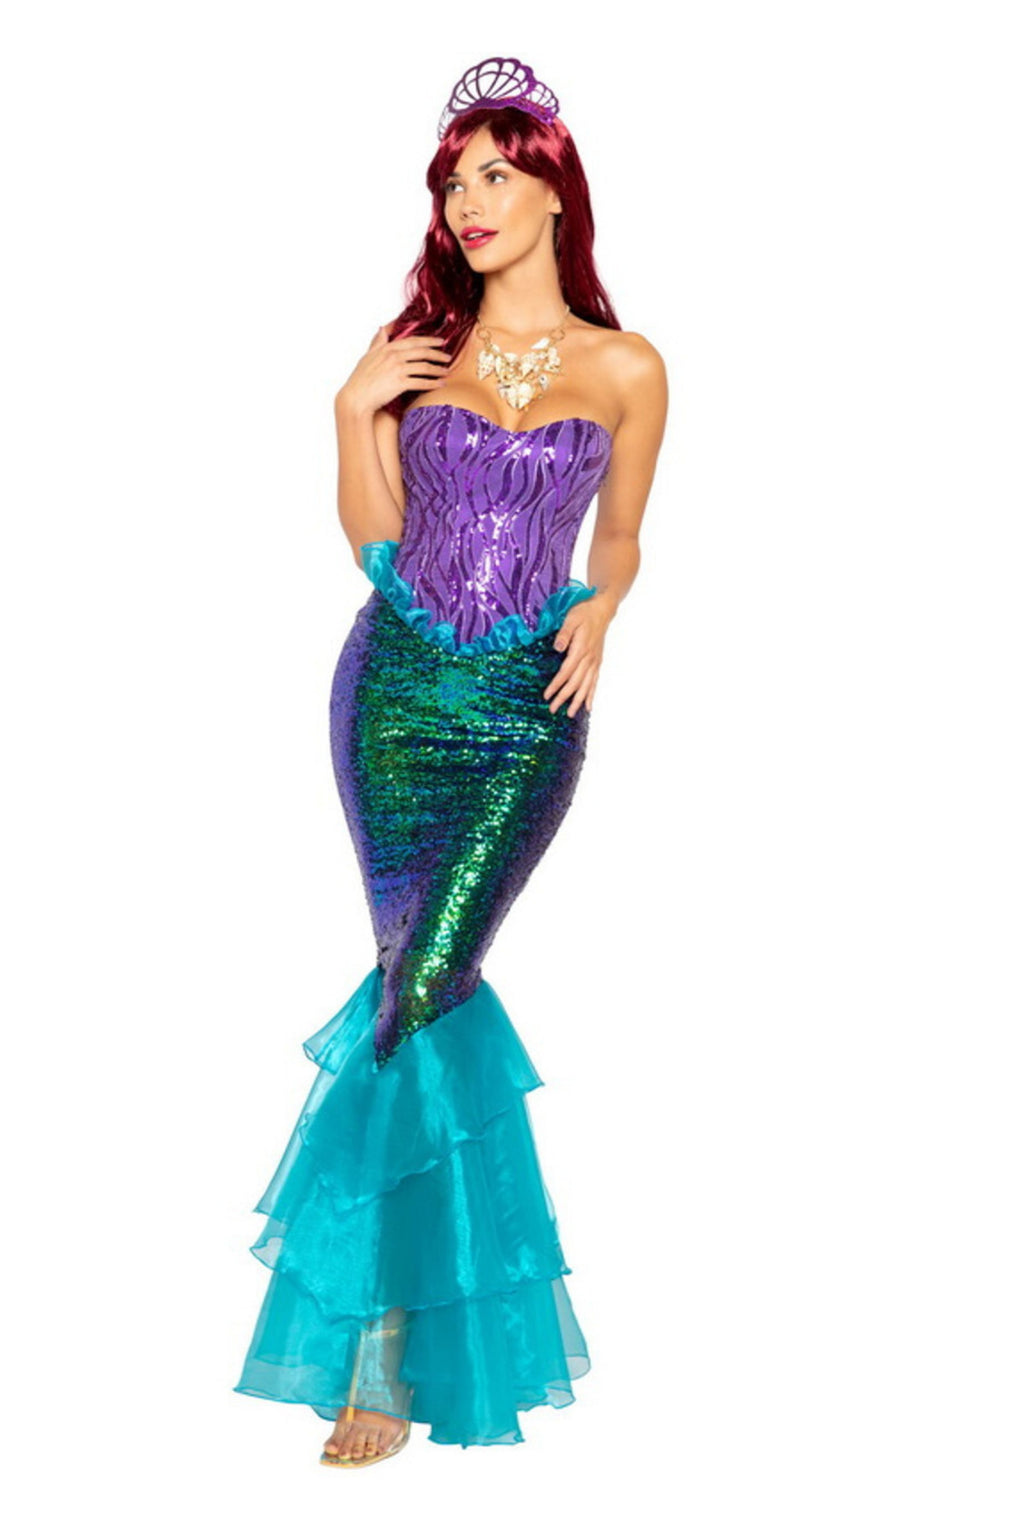 Majestic Mermaid Costume